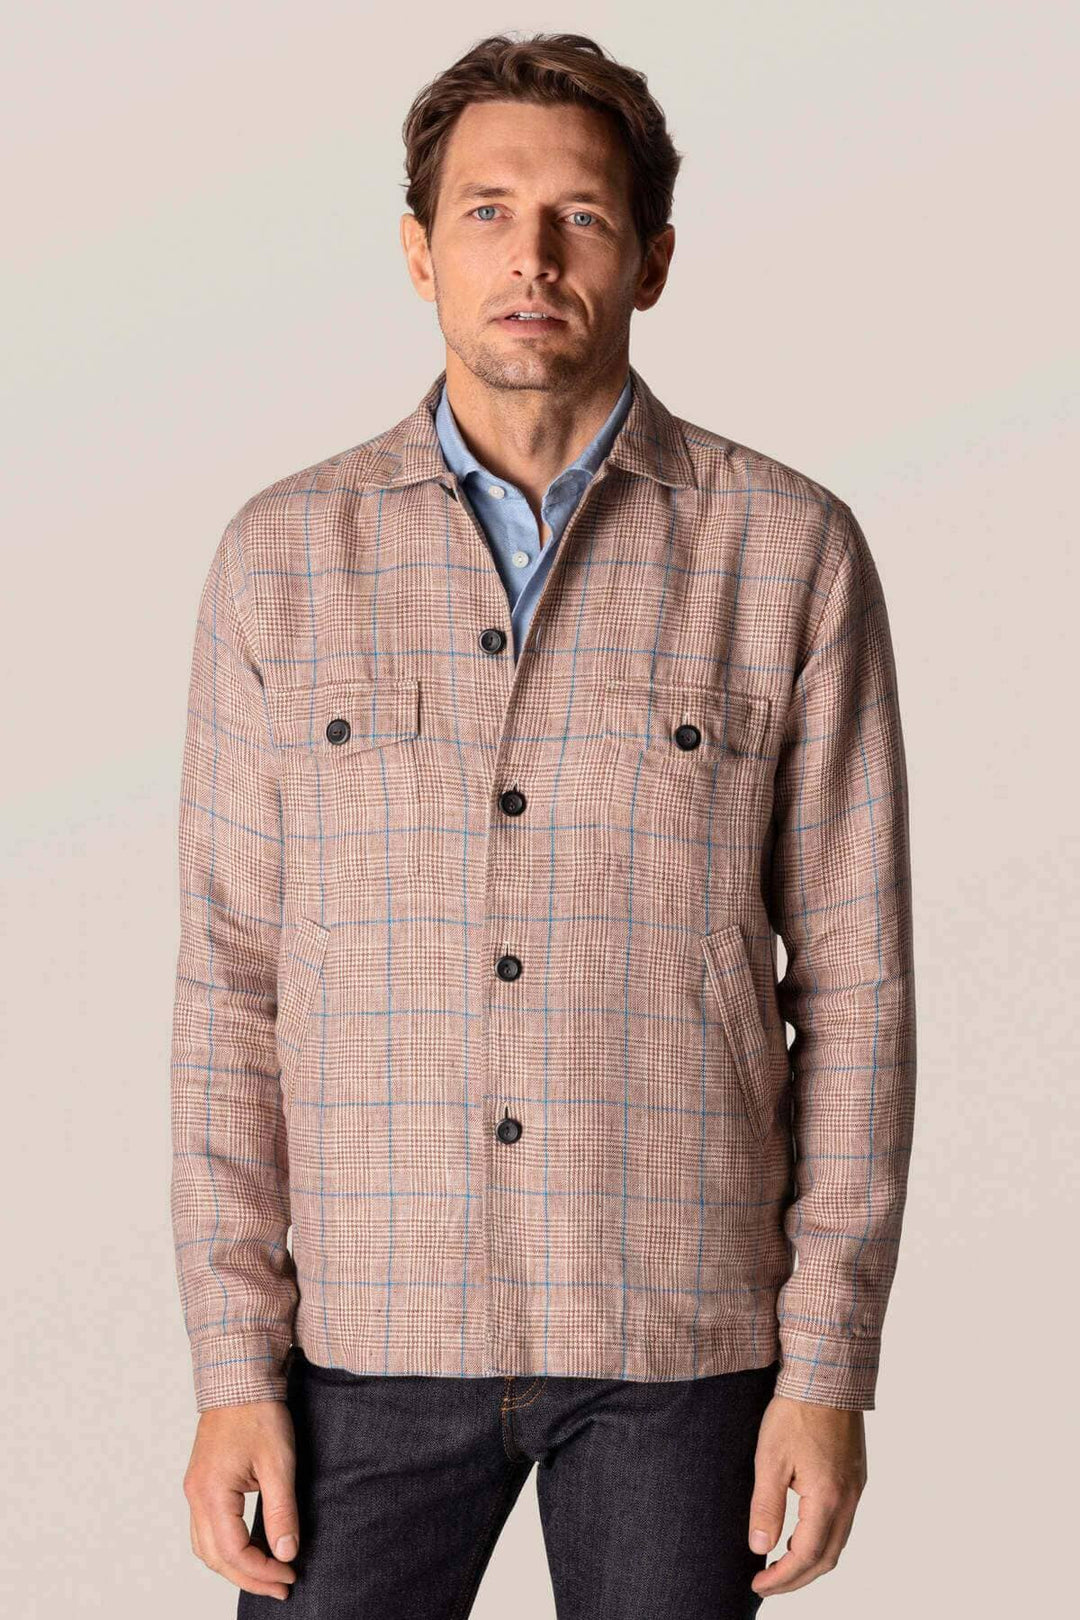 Veste-chemise en lin Homme - Chemise - Chemise sur mesure Eton